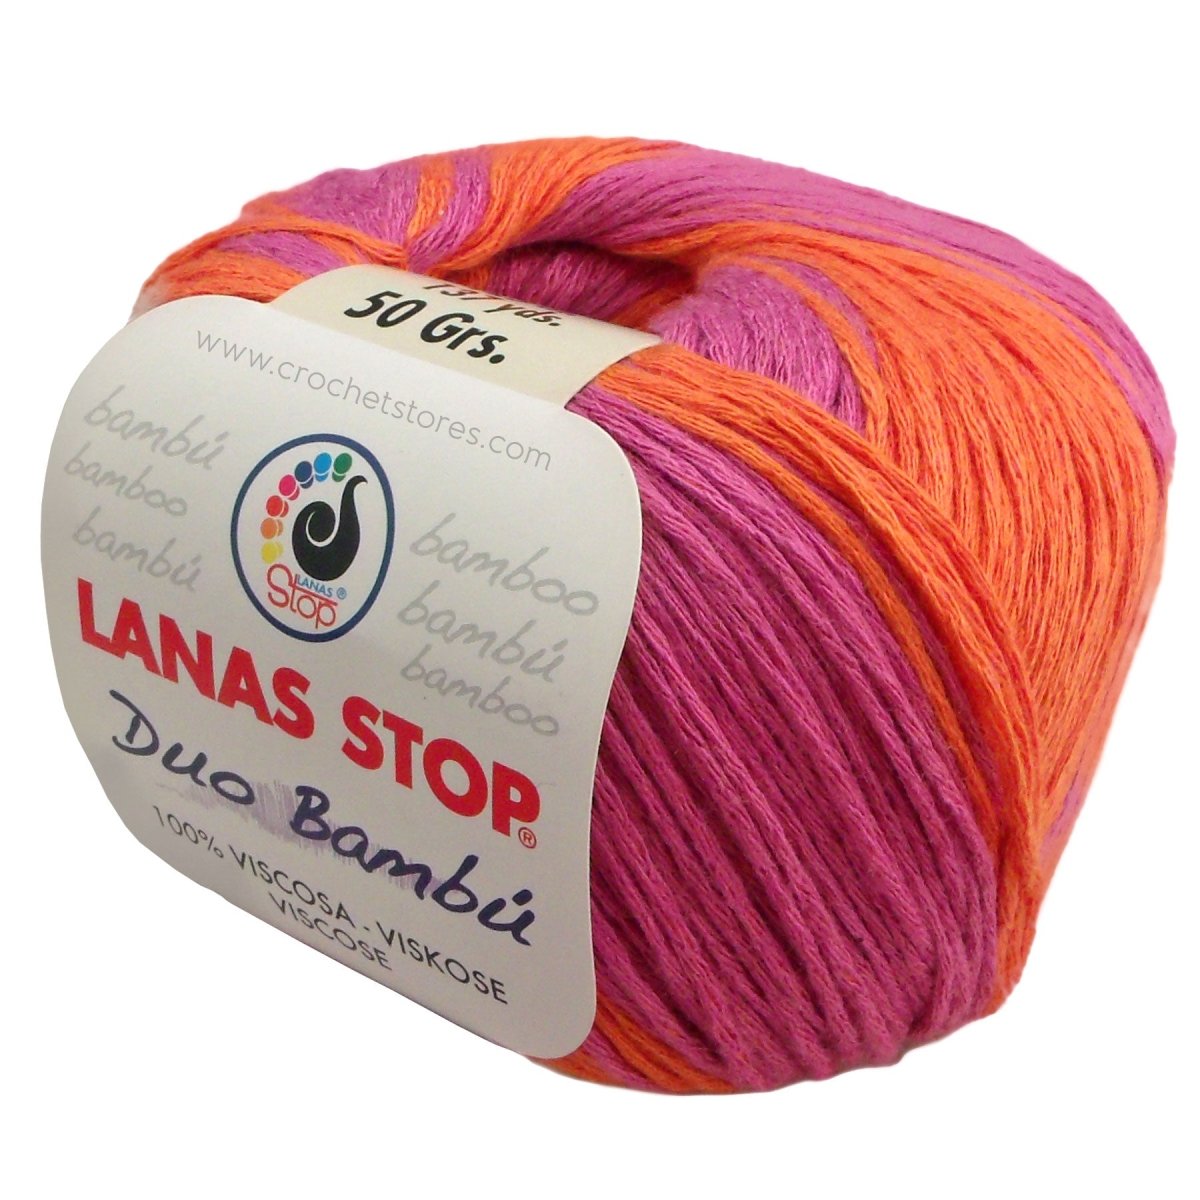 DUO BAMBU - CrochetstoresDUO2108430412079974